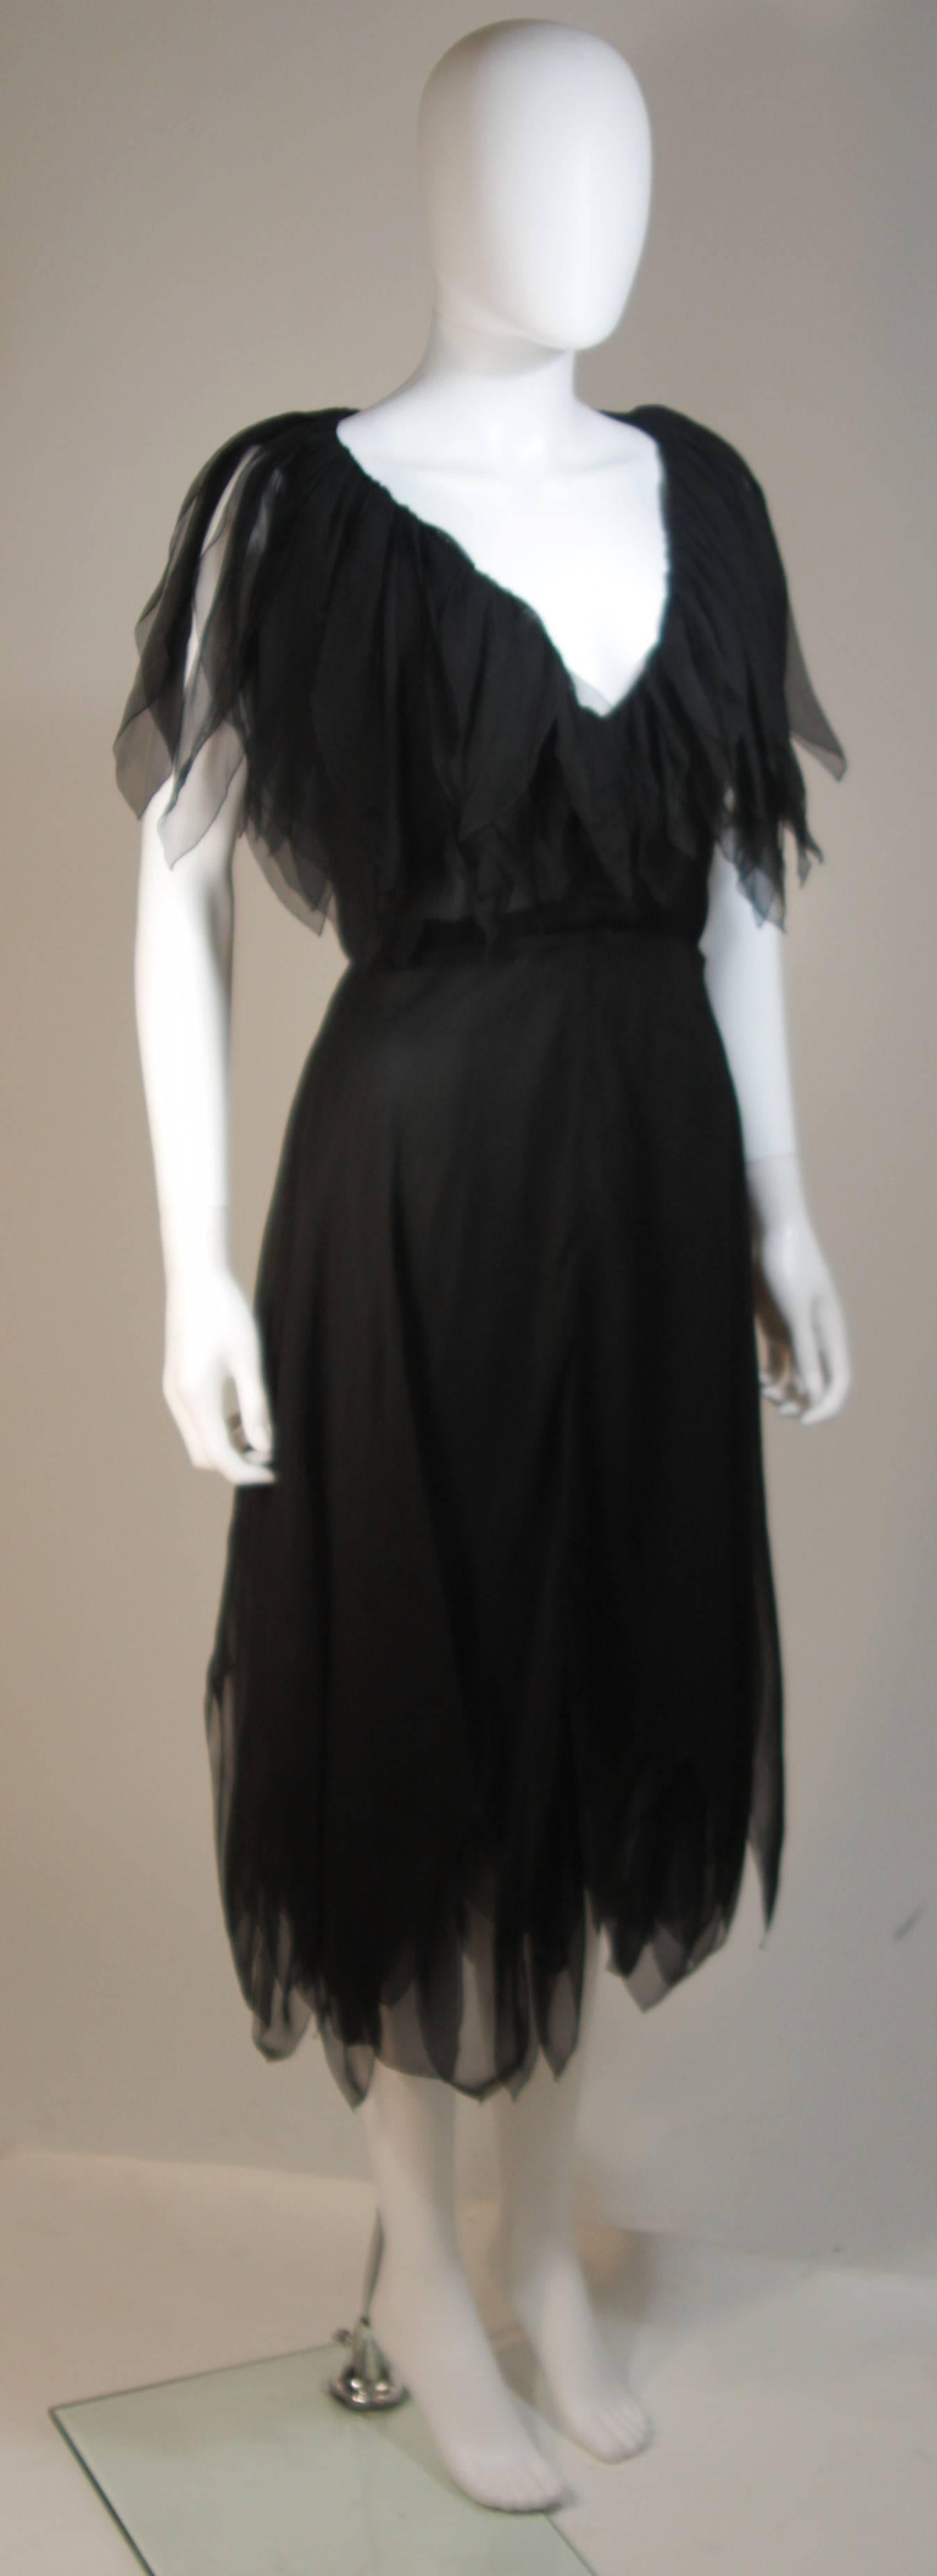 CHRISTIAN DIOR COUTURE Layered Black Silk Chiffon Cocktail Dress Size 4-6 1